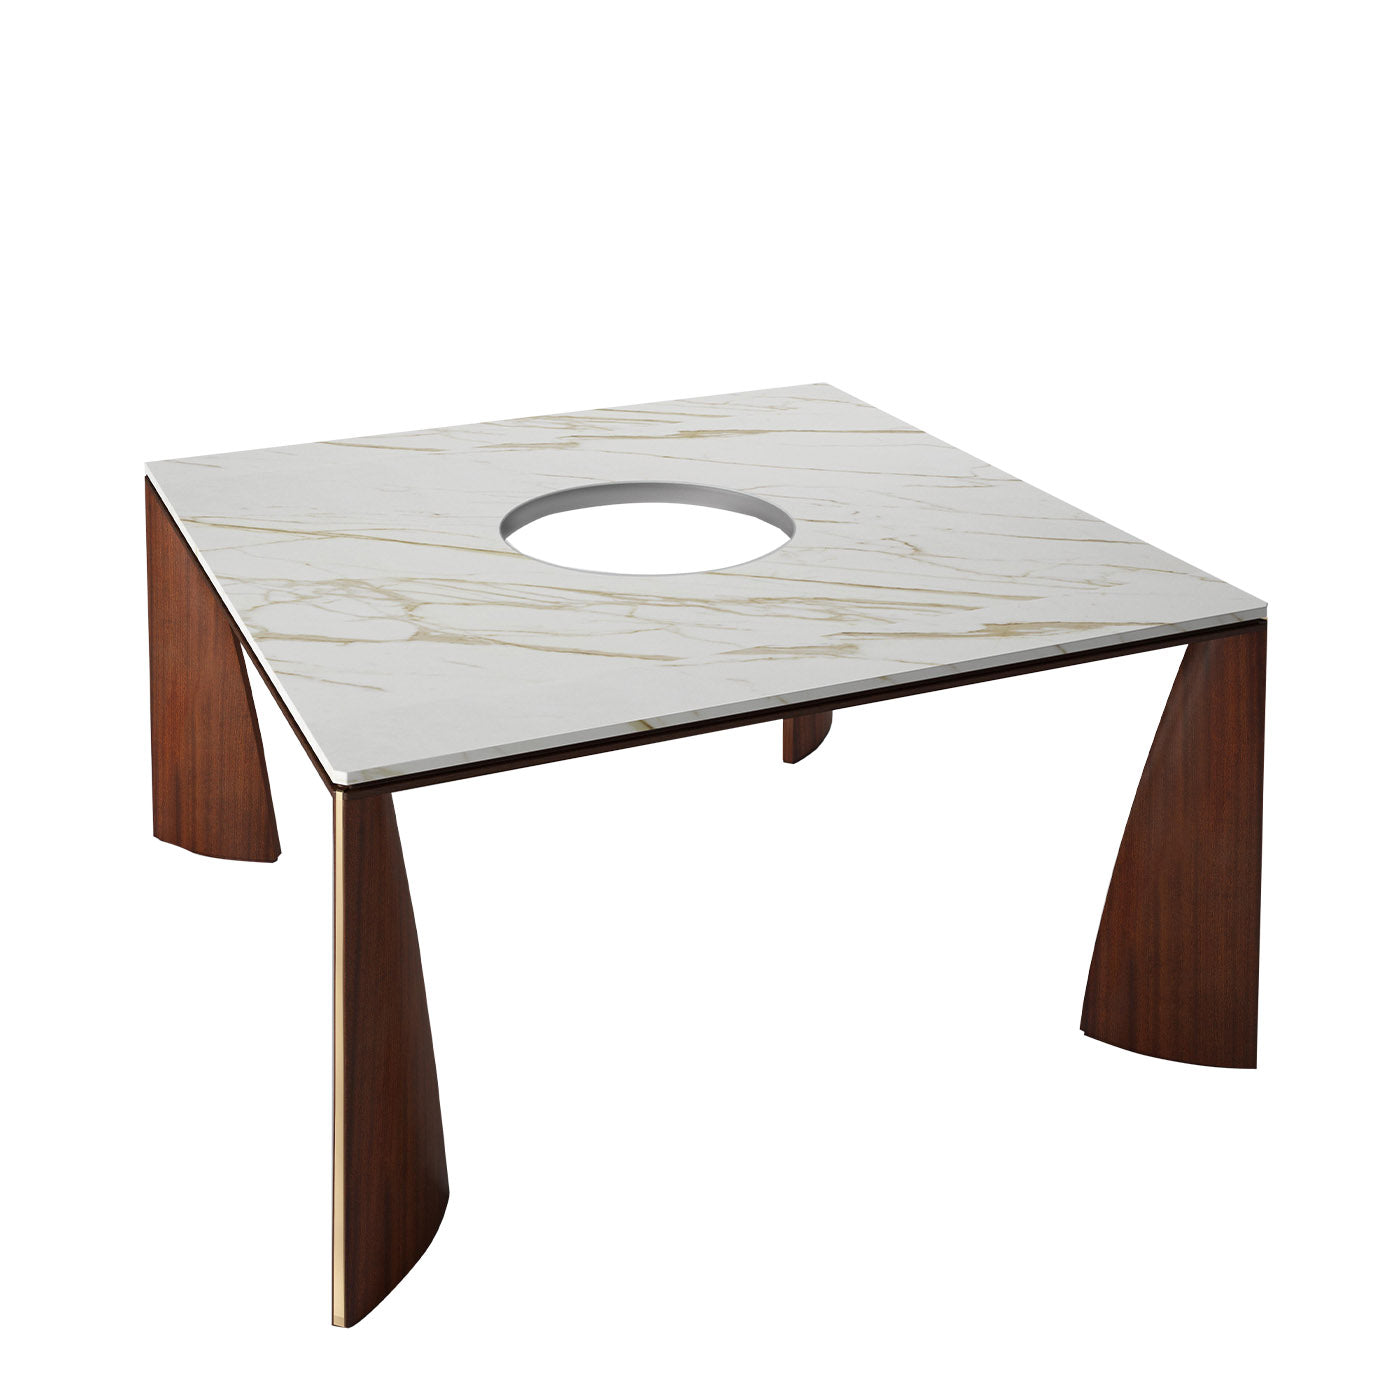 Mahogany Wood and Calacatta Marble Dining Table - Alternative view 1